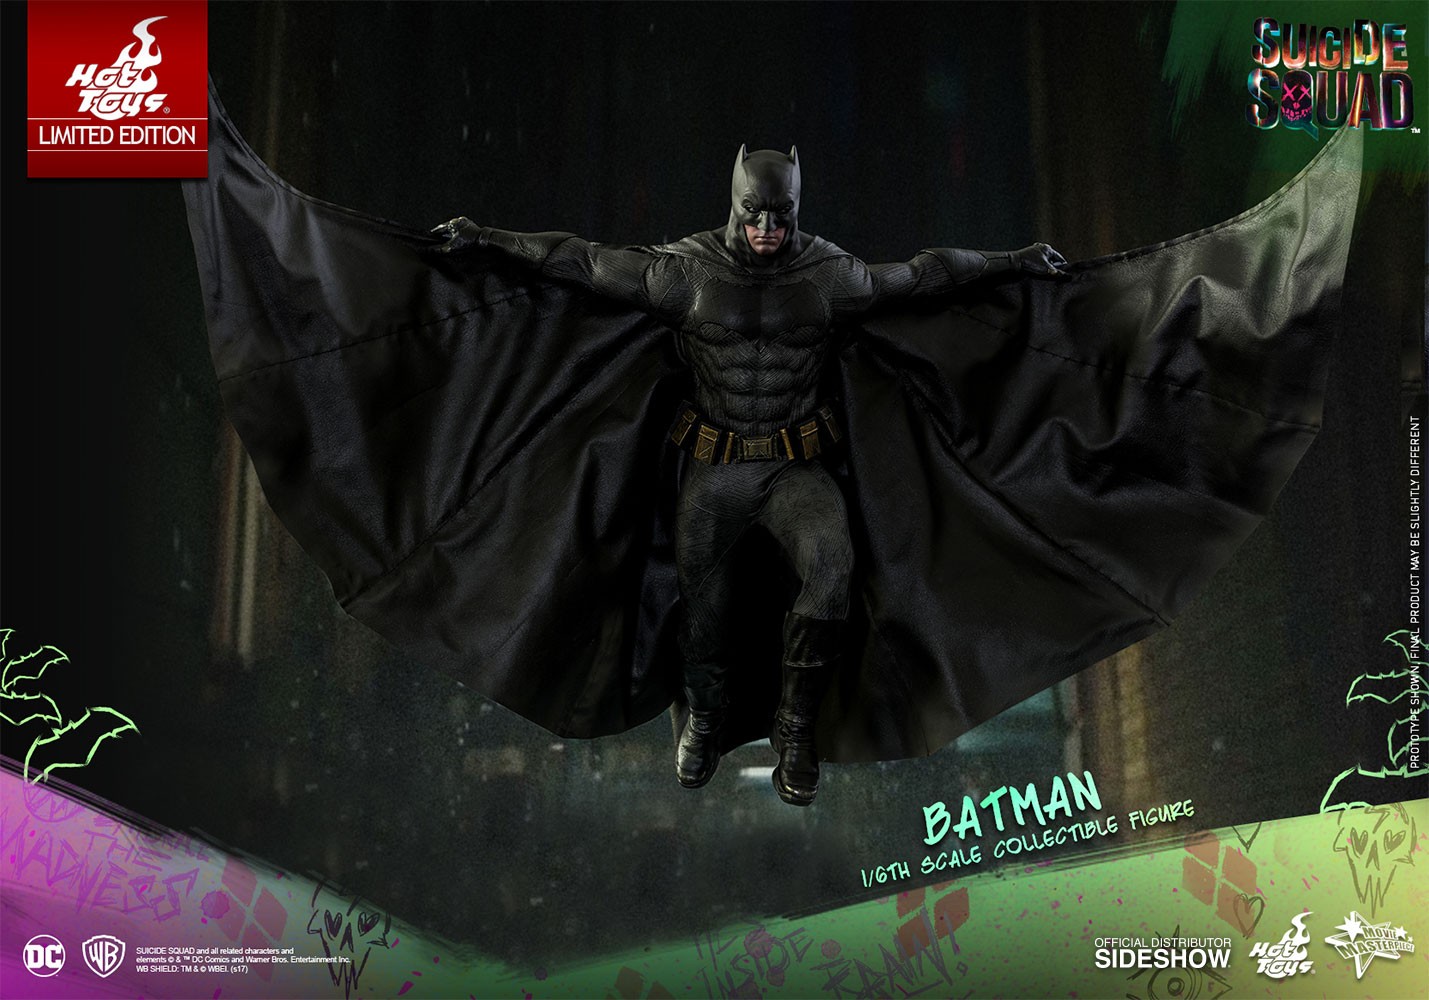 Batman Exclusive Edition (Prototype Shown) View 22